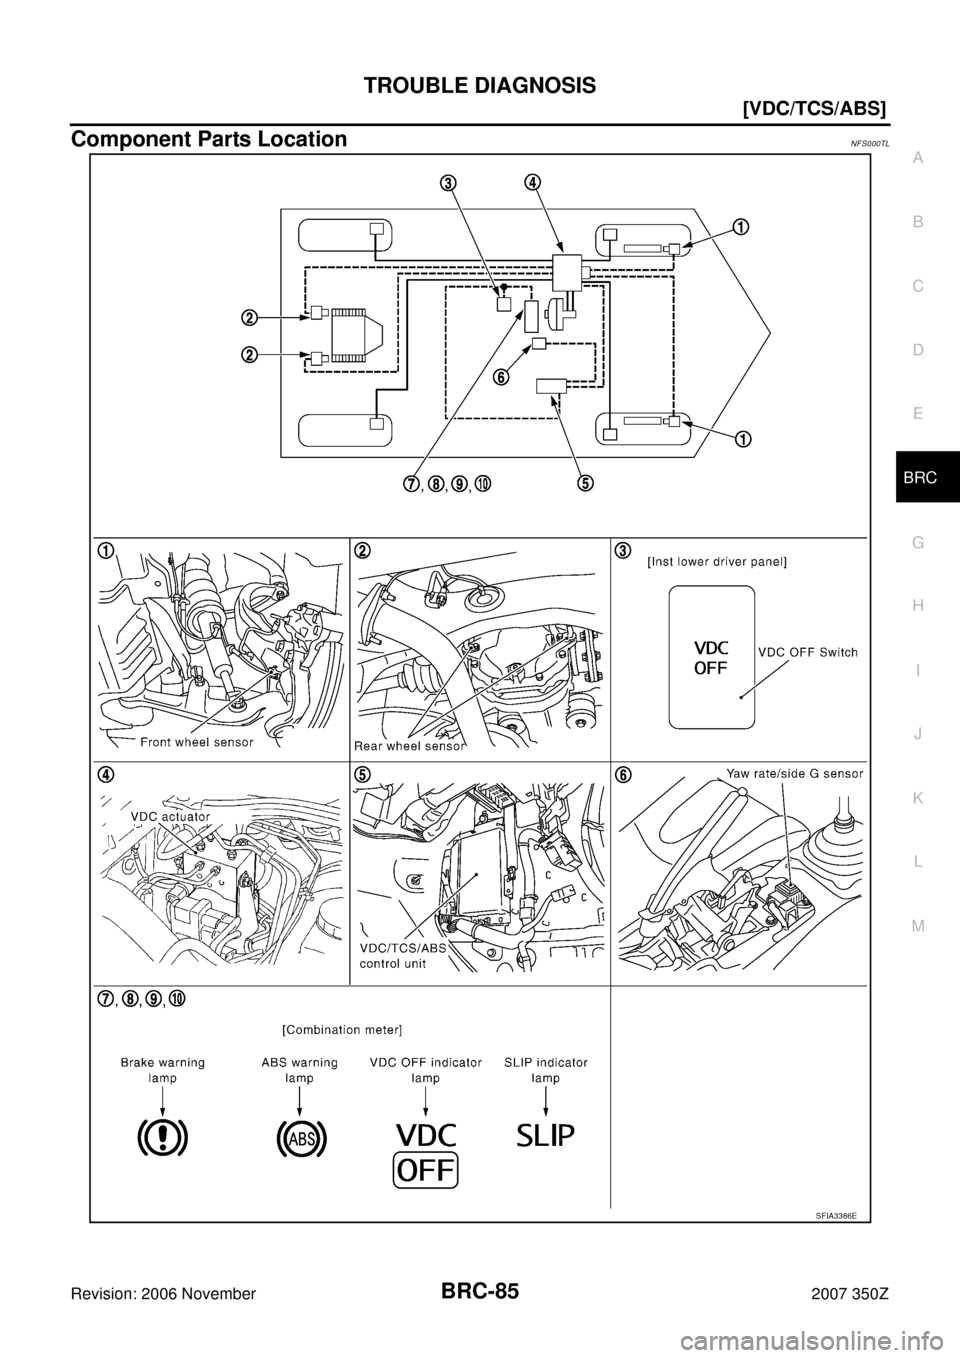 NISSAN 350Z 2007 Z33 Brake Control System Manual Online TROUBLE DIAGNOSIS
BRC-85
[VDC/TCS/ABS]
C
D
E
G
H
I
J
K
L
MA
B
BRC
Revision: 2006 November2007 350Z
Component Parts LocationNFS000TL
SFIA3386E 